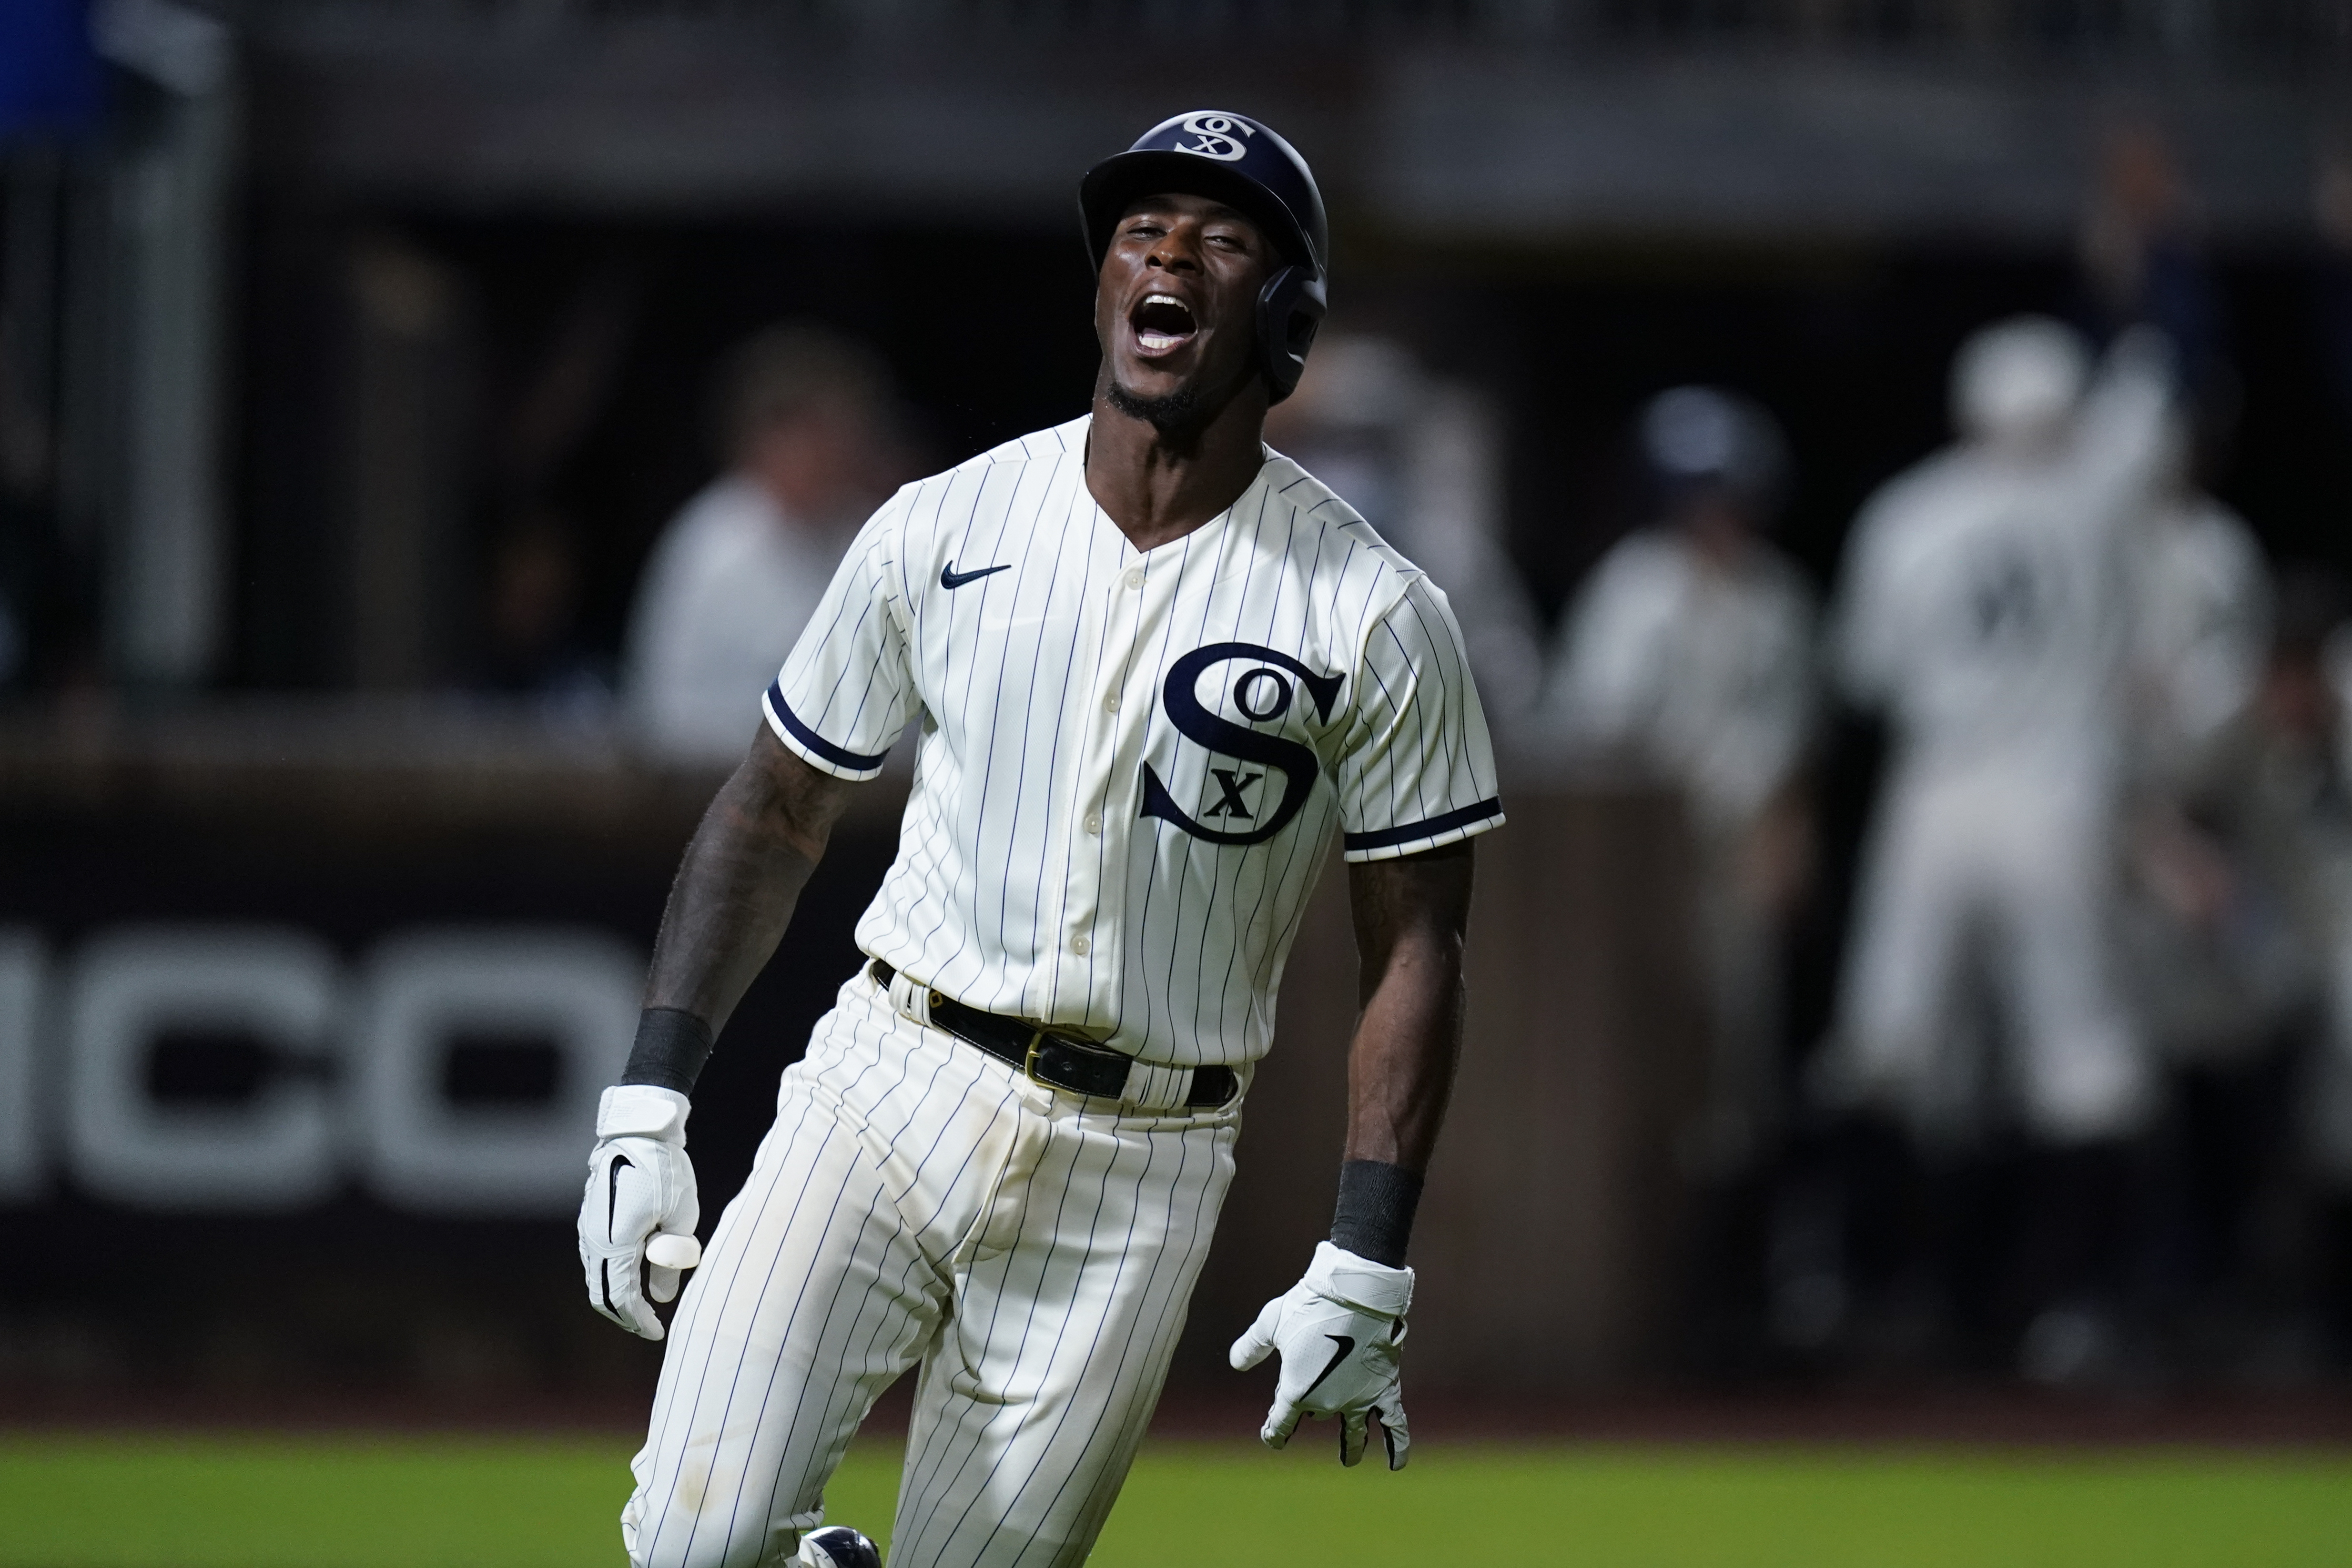 Field of Dreams game: Recap of Yankees vs. White Sox in Iowa